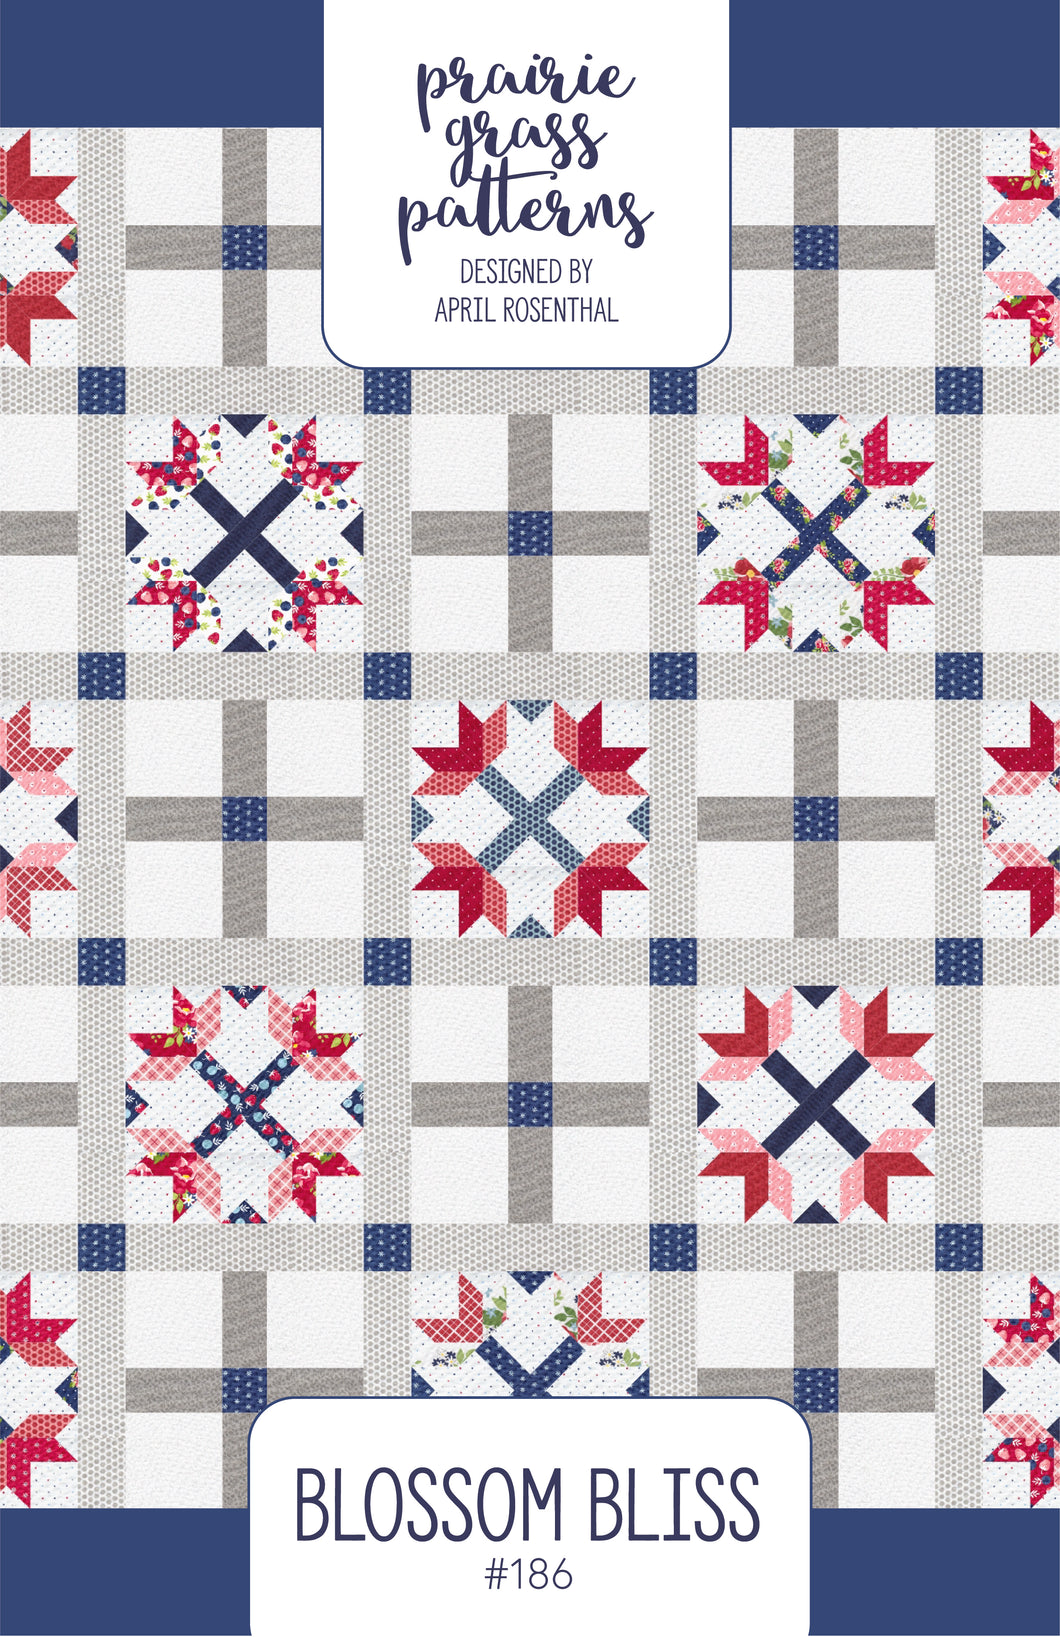 #186 - Blossom Bliss Quilt Paper Pattern